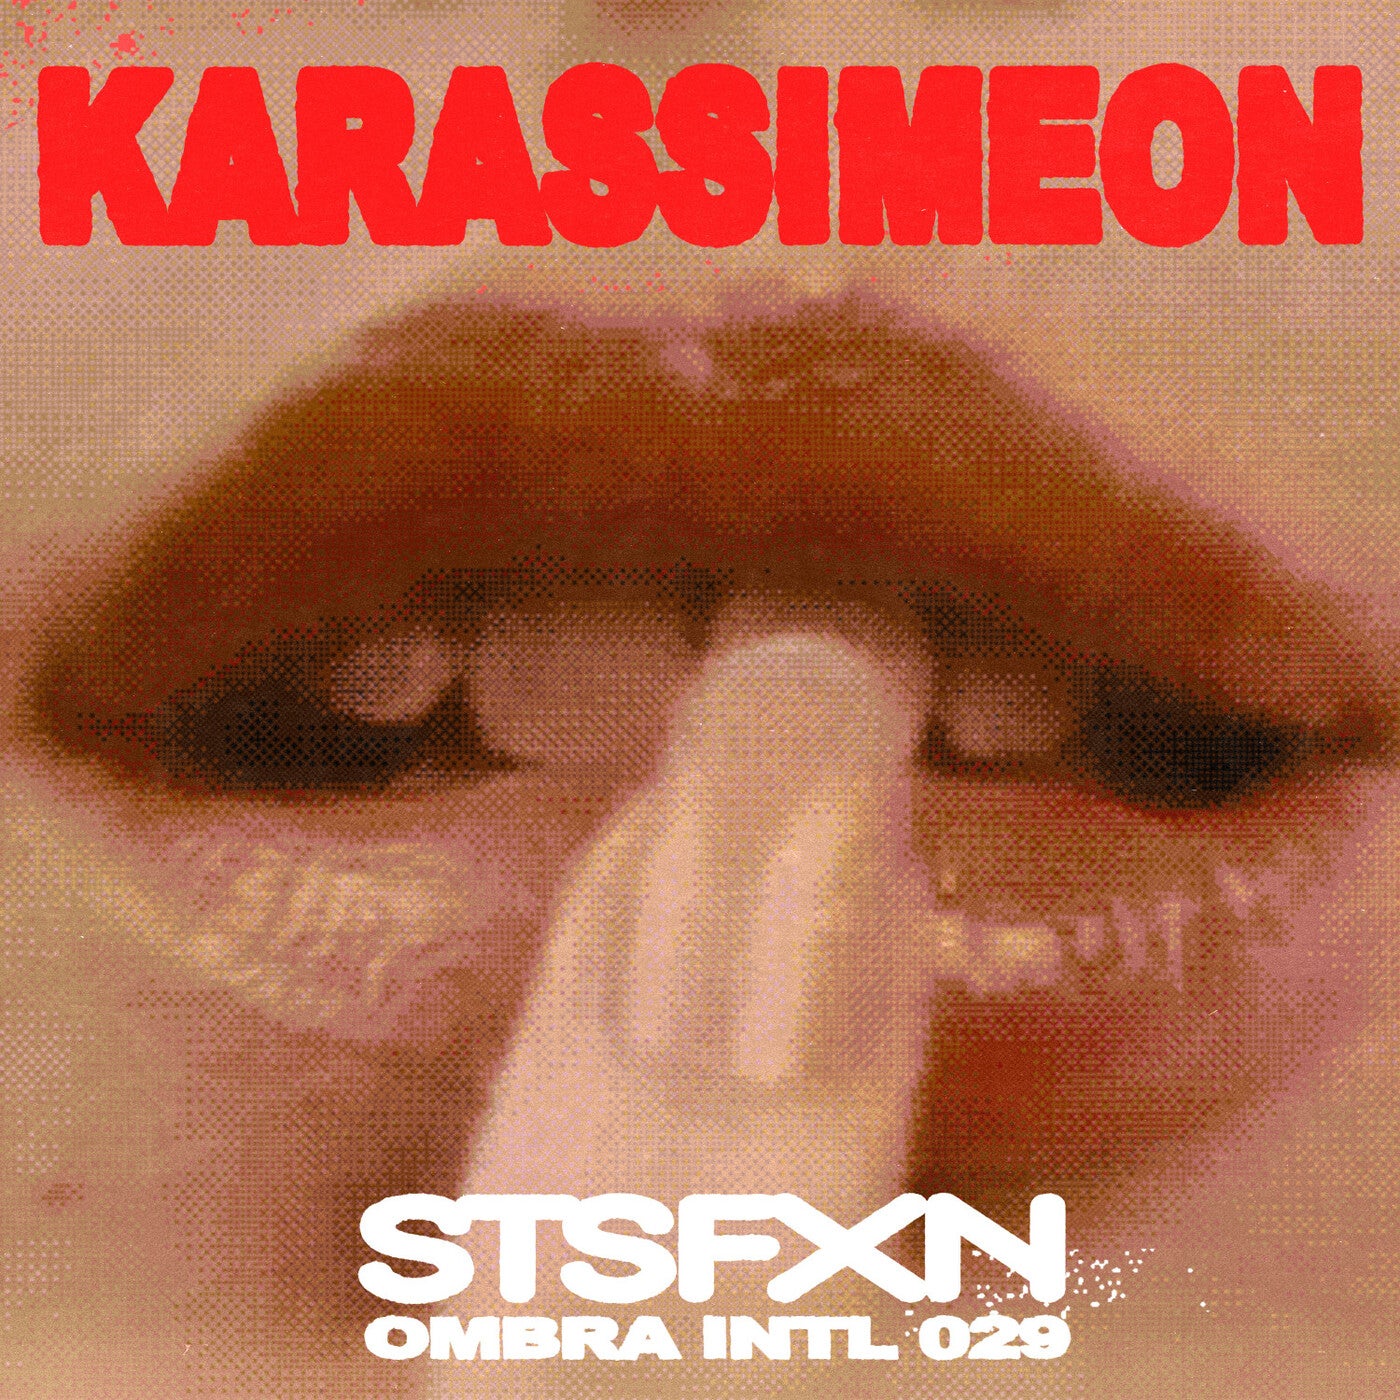 Cover - Karassimeon - STSFXN (Original Mix)